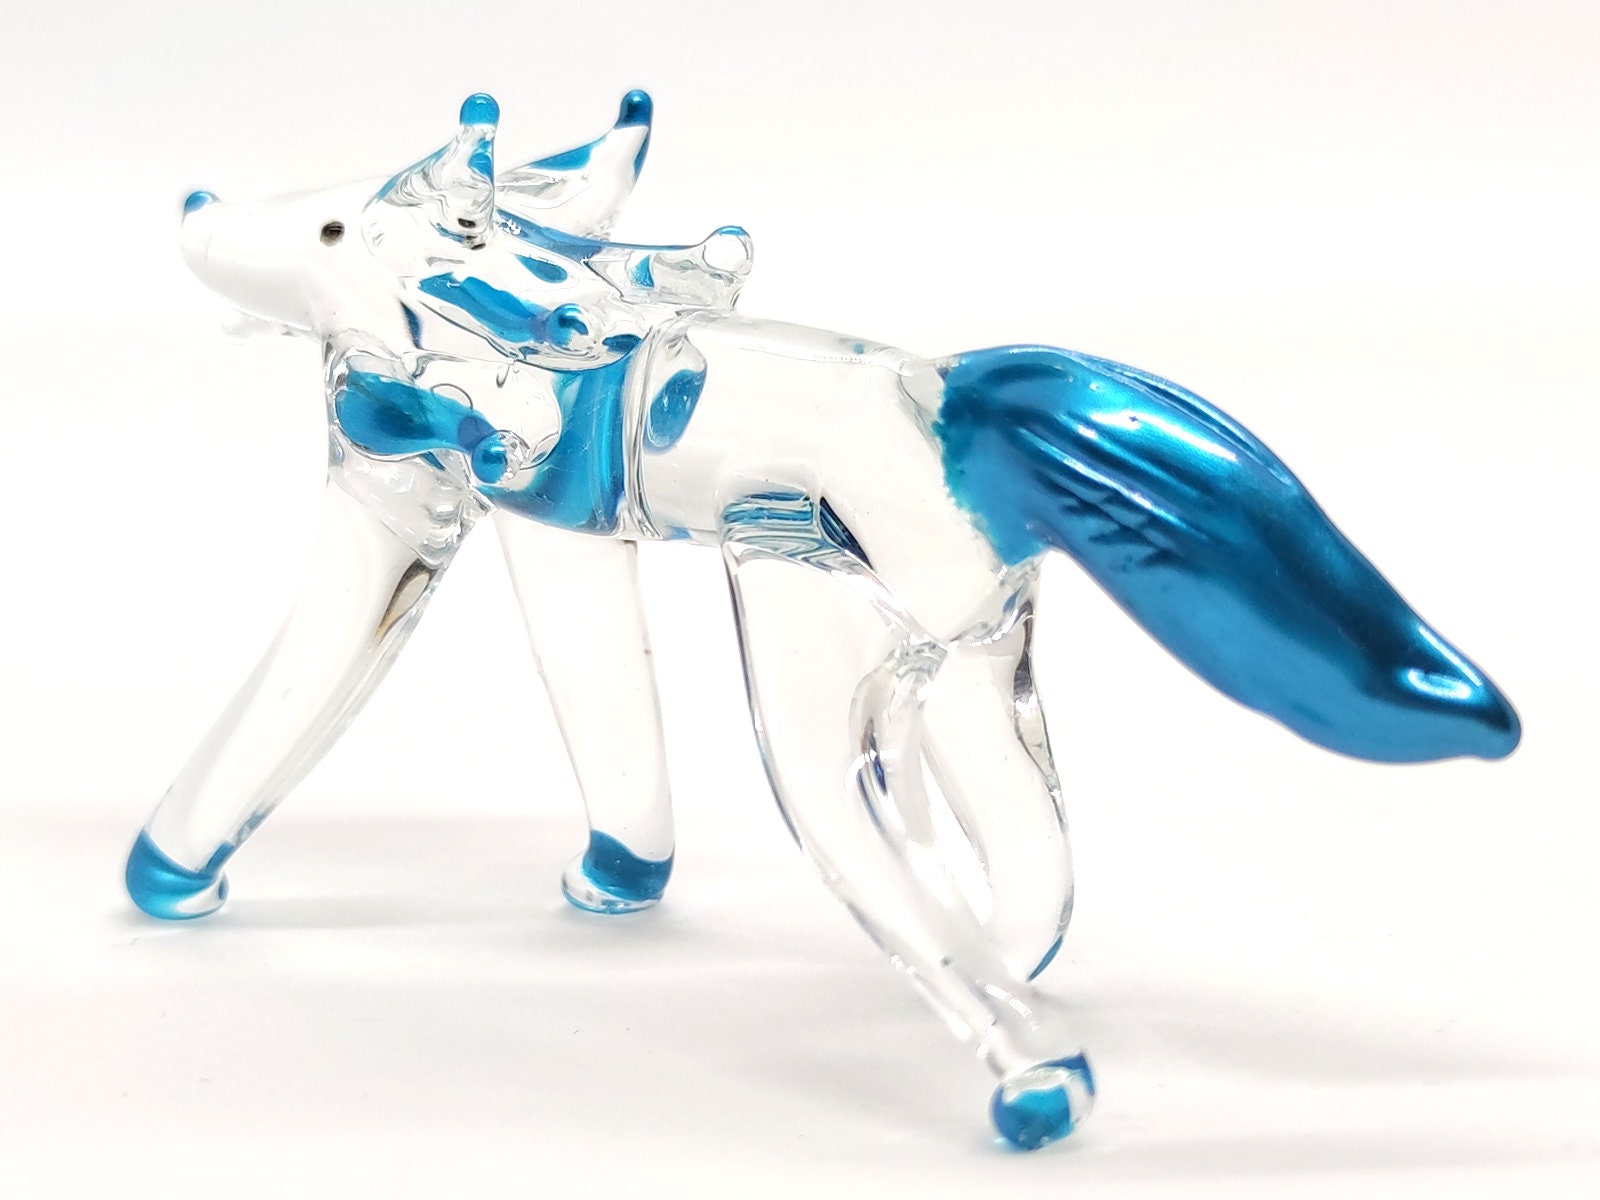 Fox Miniature Figurines Animals Hand Blown Glass Art - Etsy